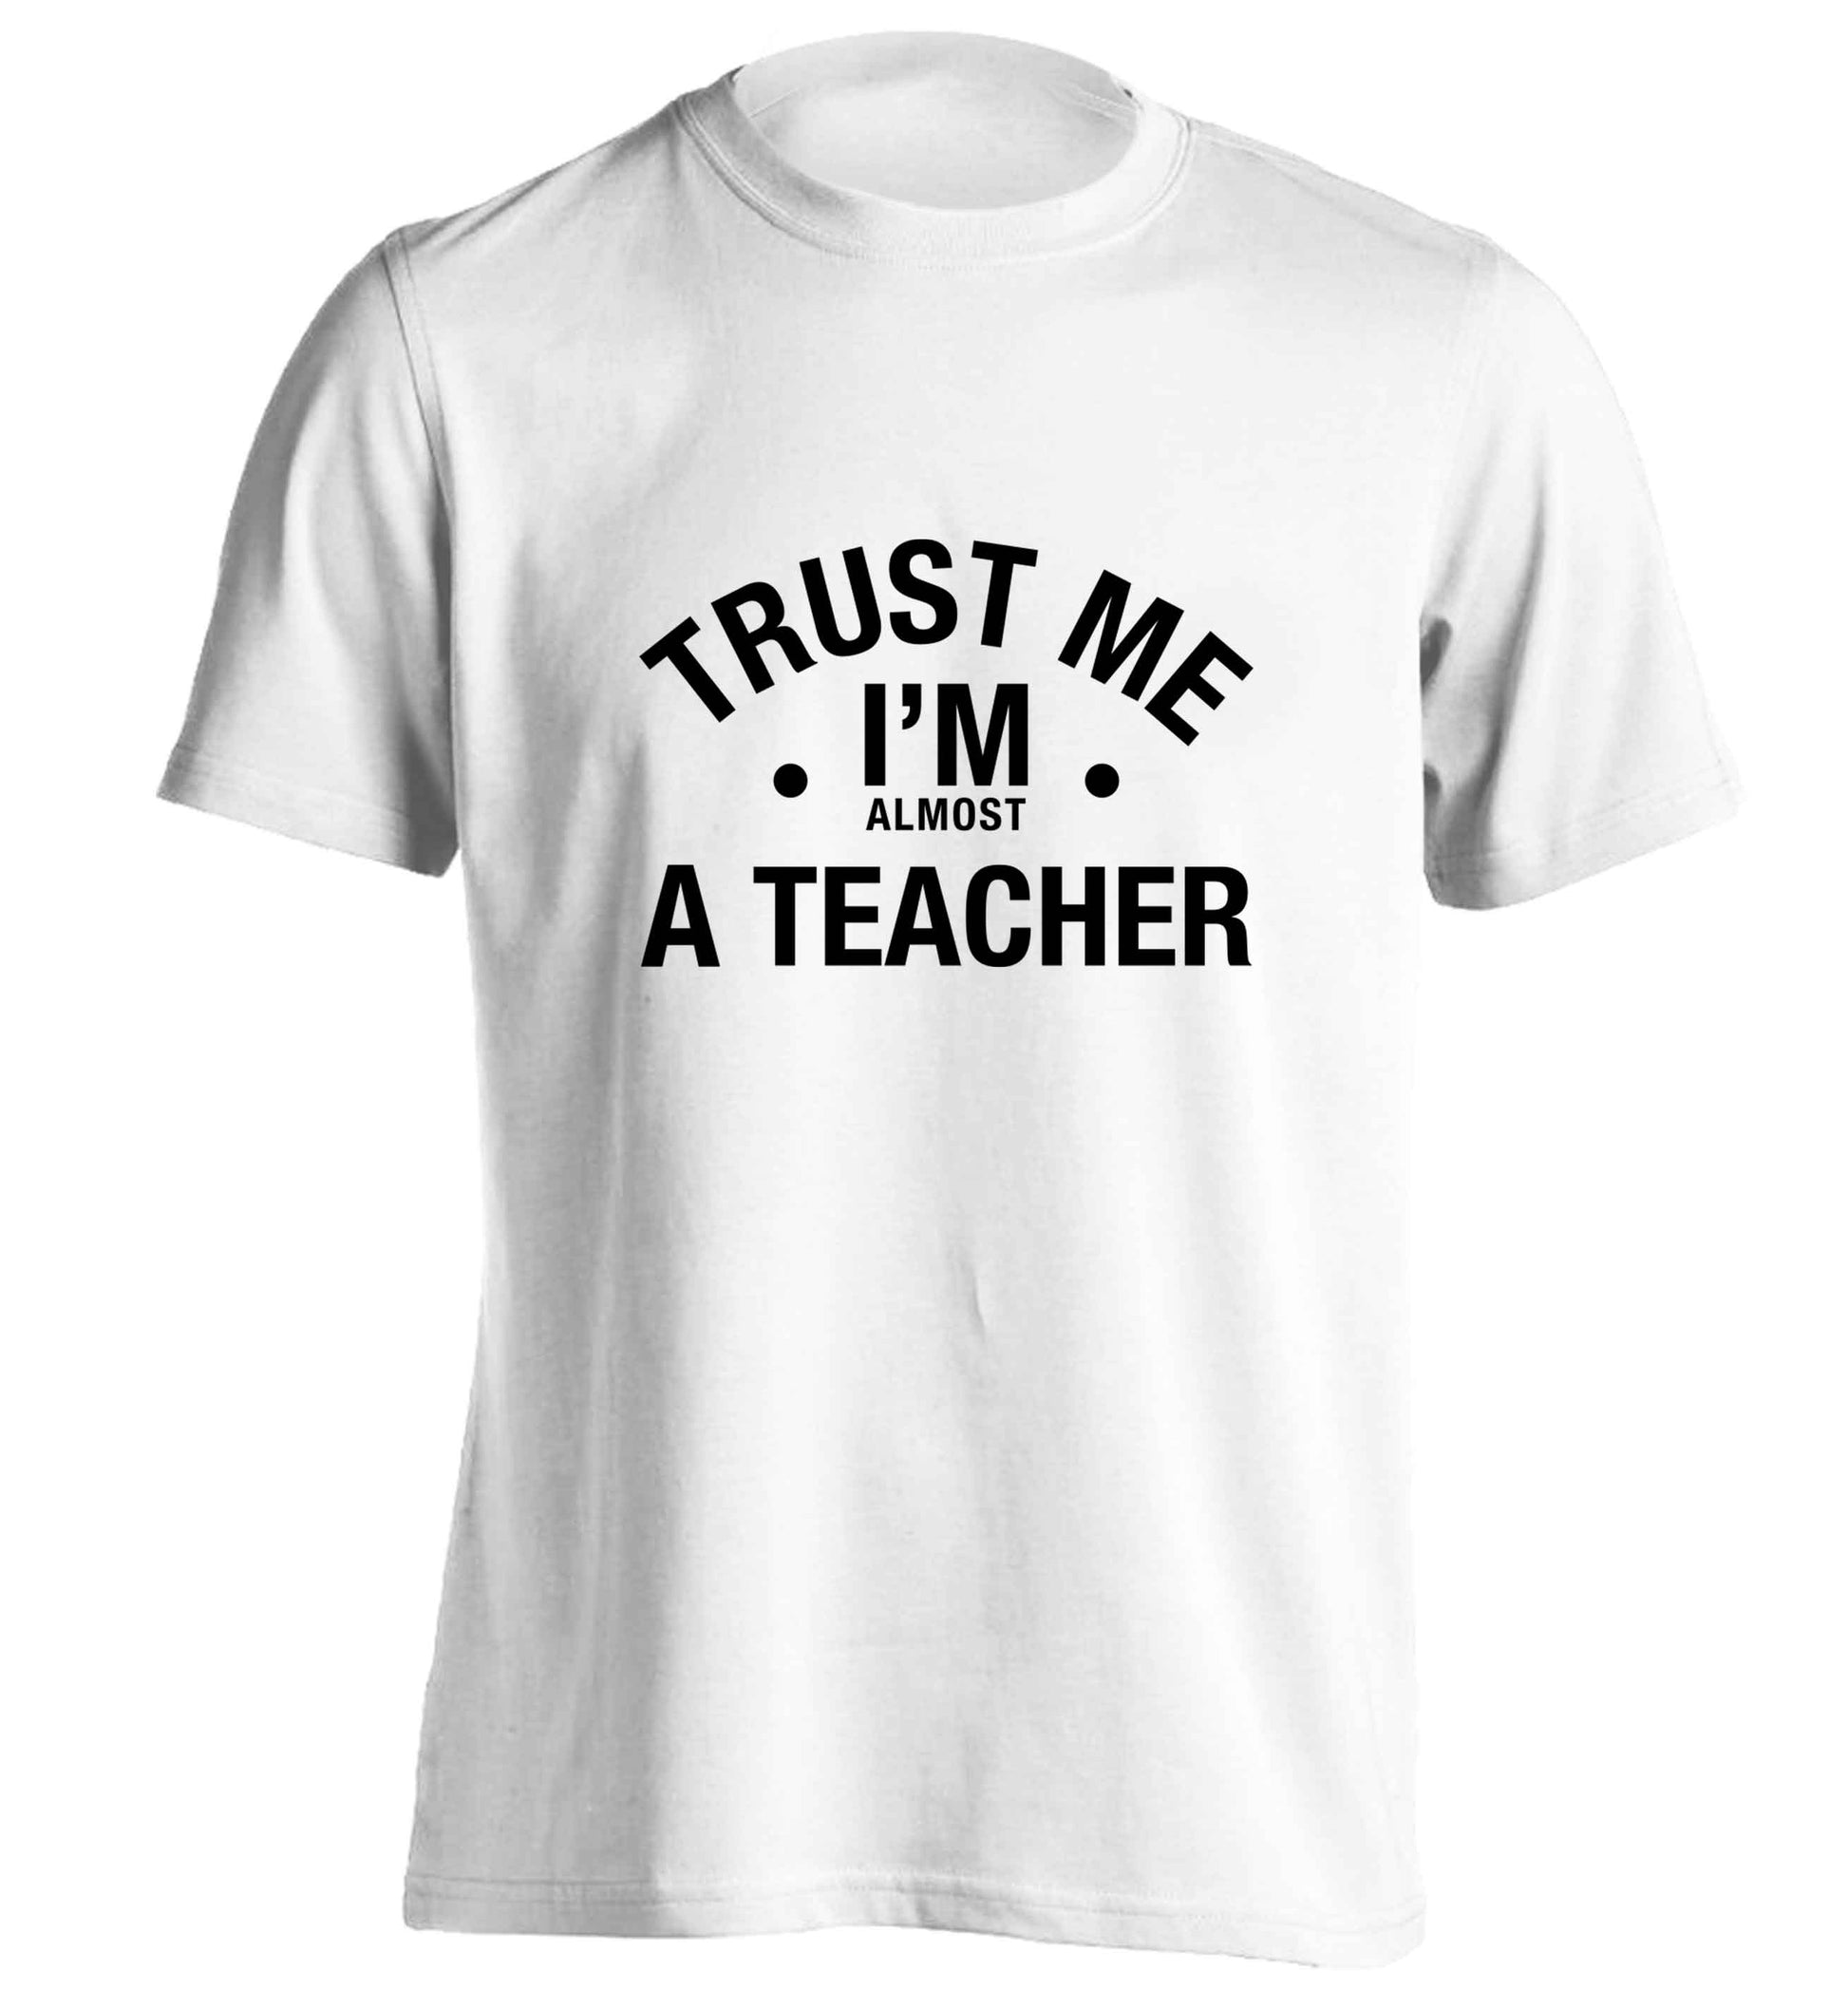 Trust me I'm almost a teacher adults unisex white Tshirt 2XL